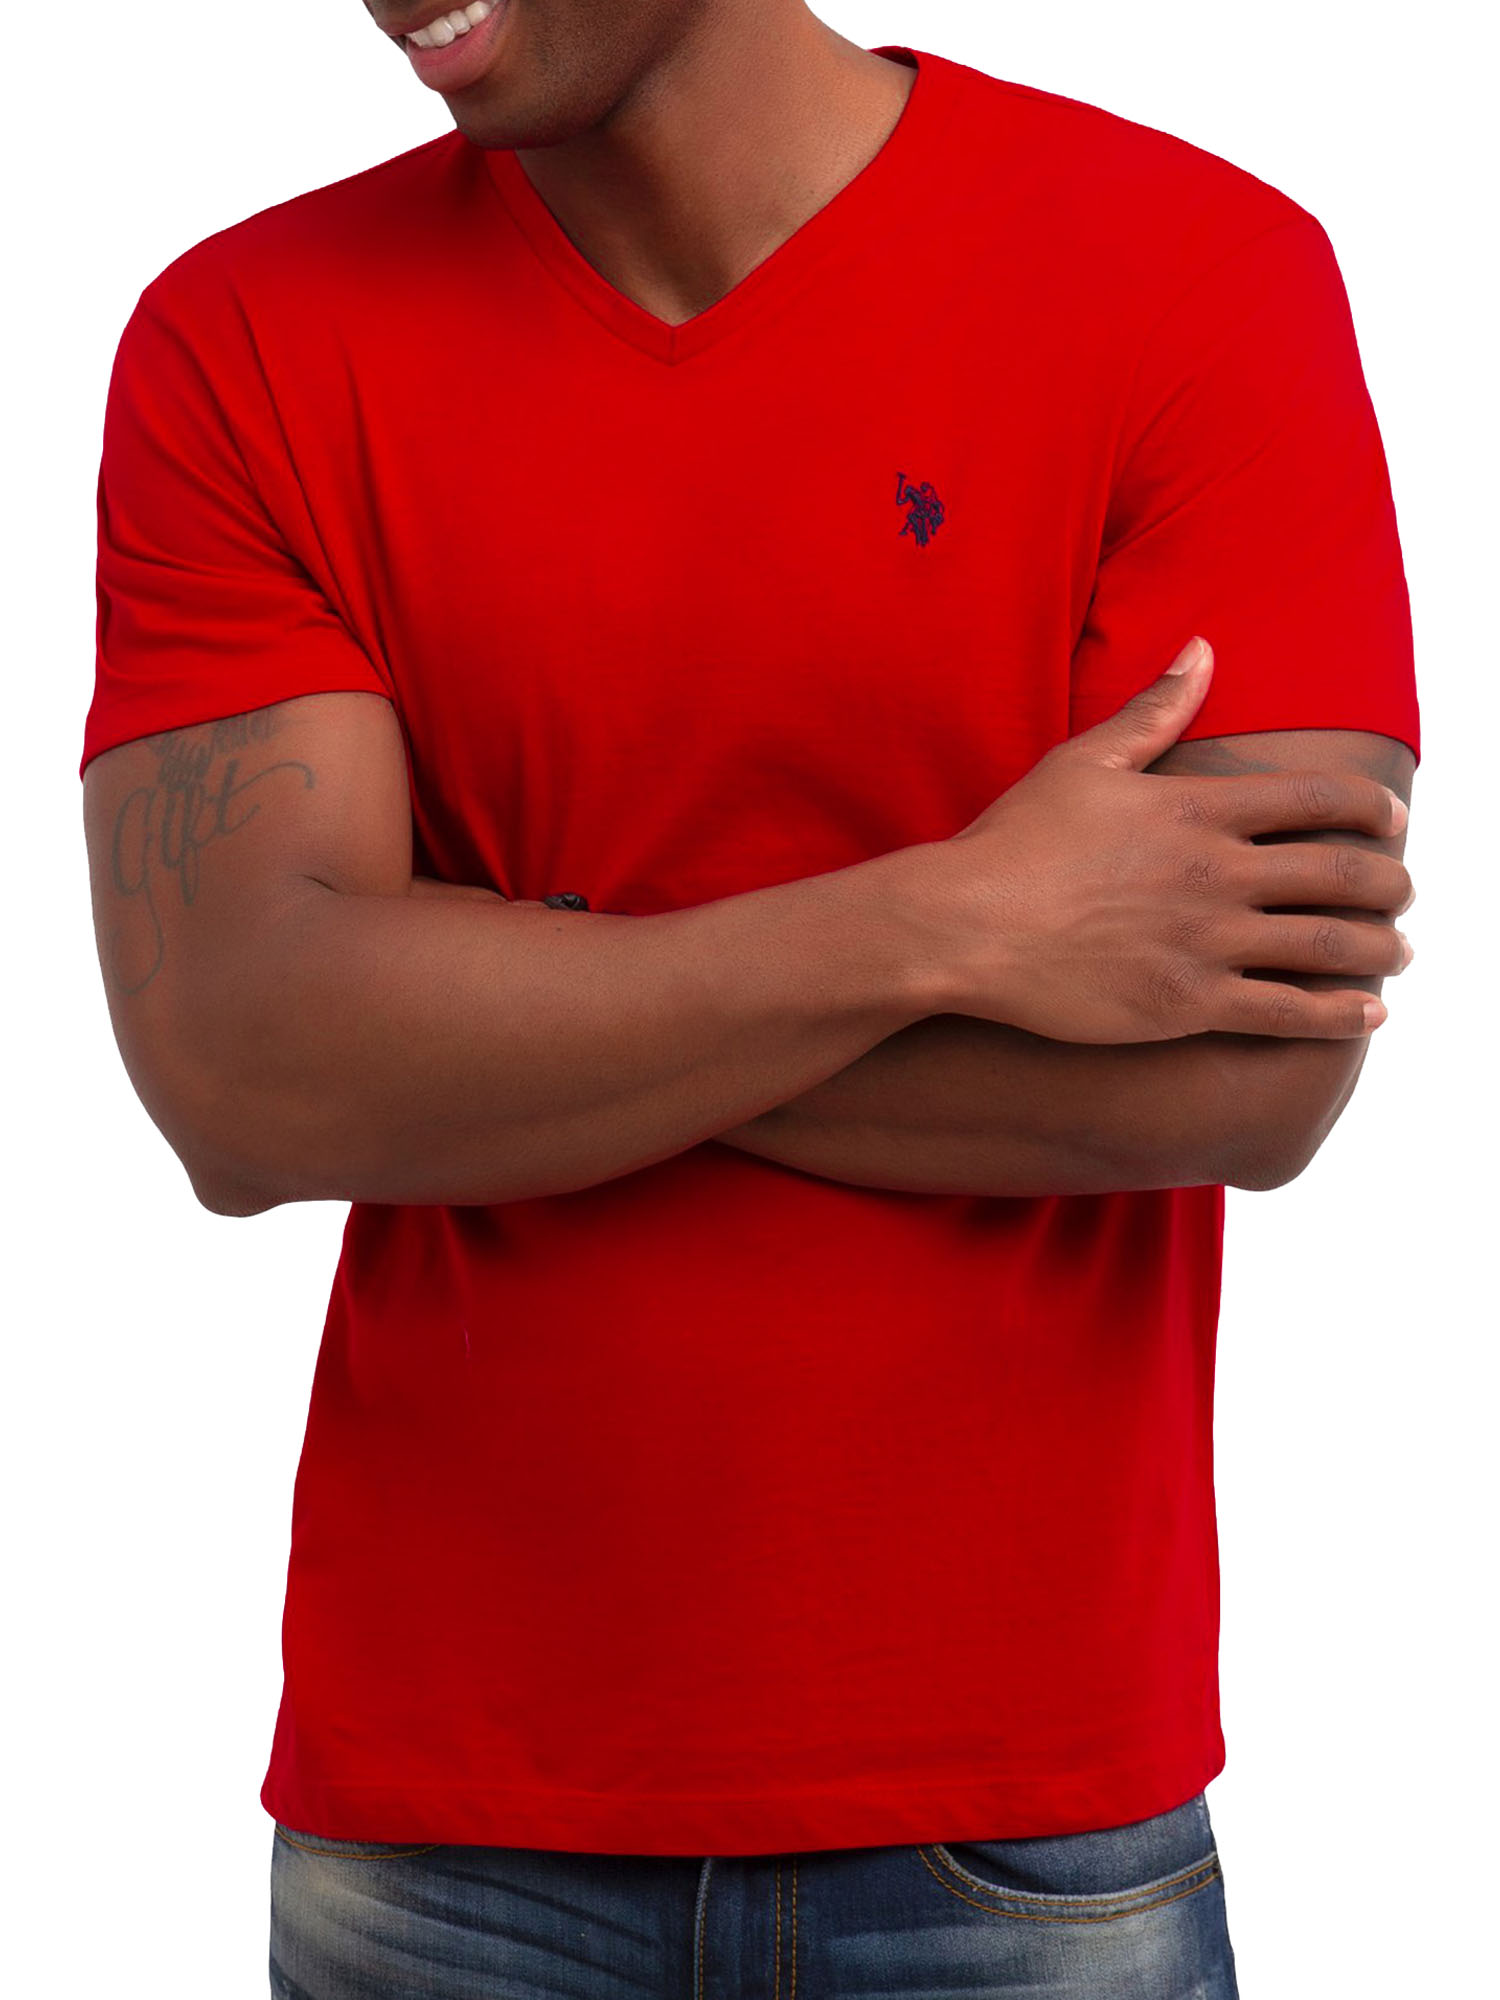 U.S. Polo Assn. Men's V-Neck T-Shirt - image 1 of 4